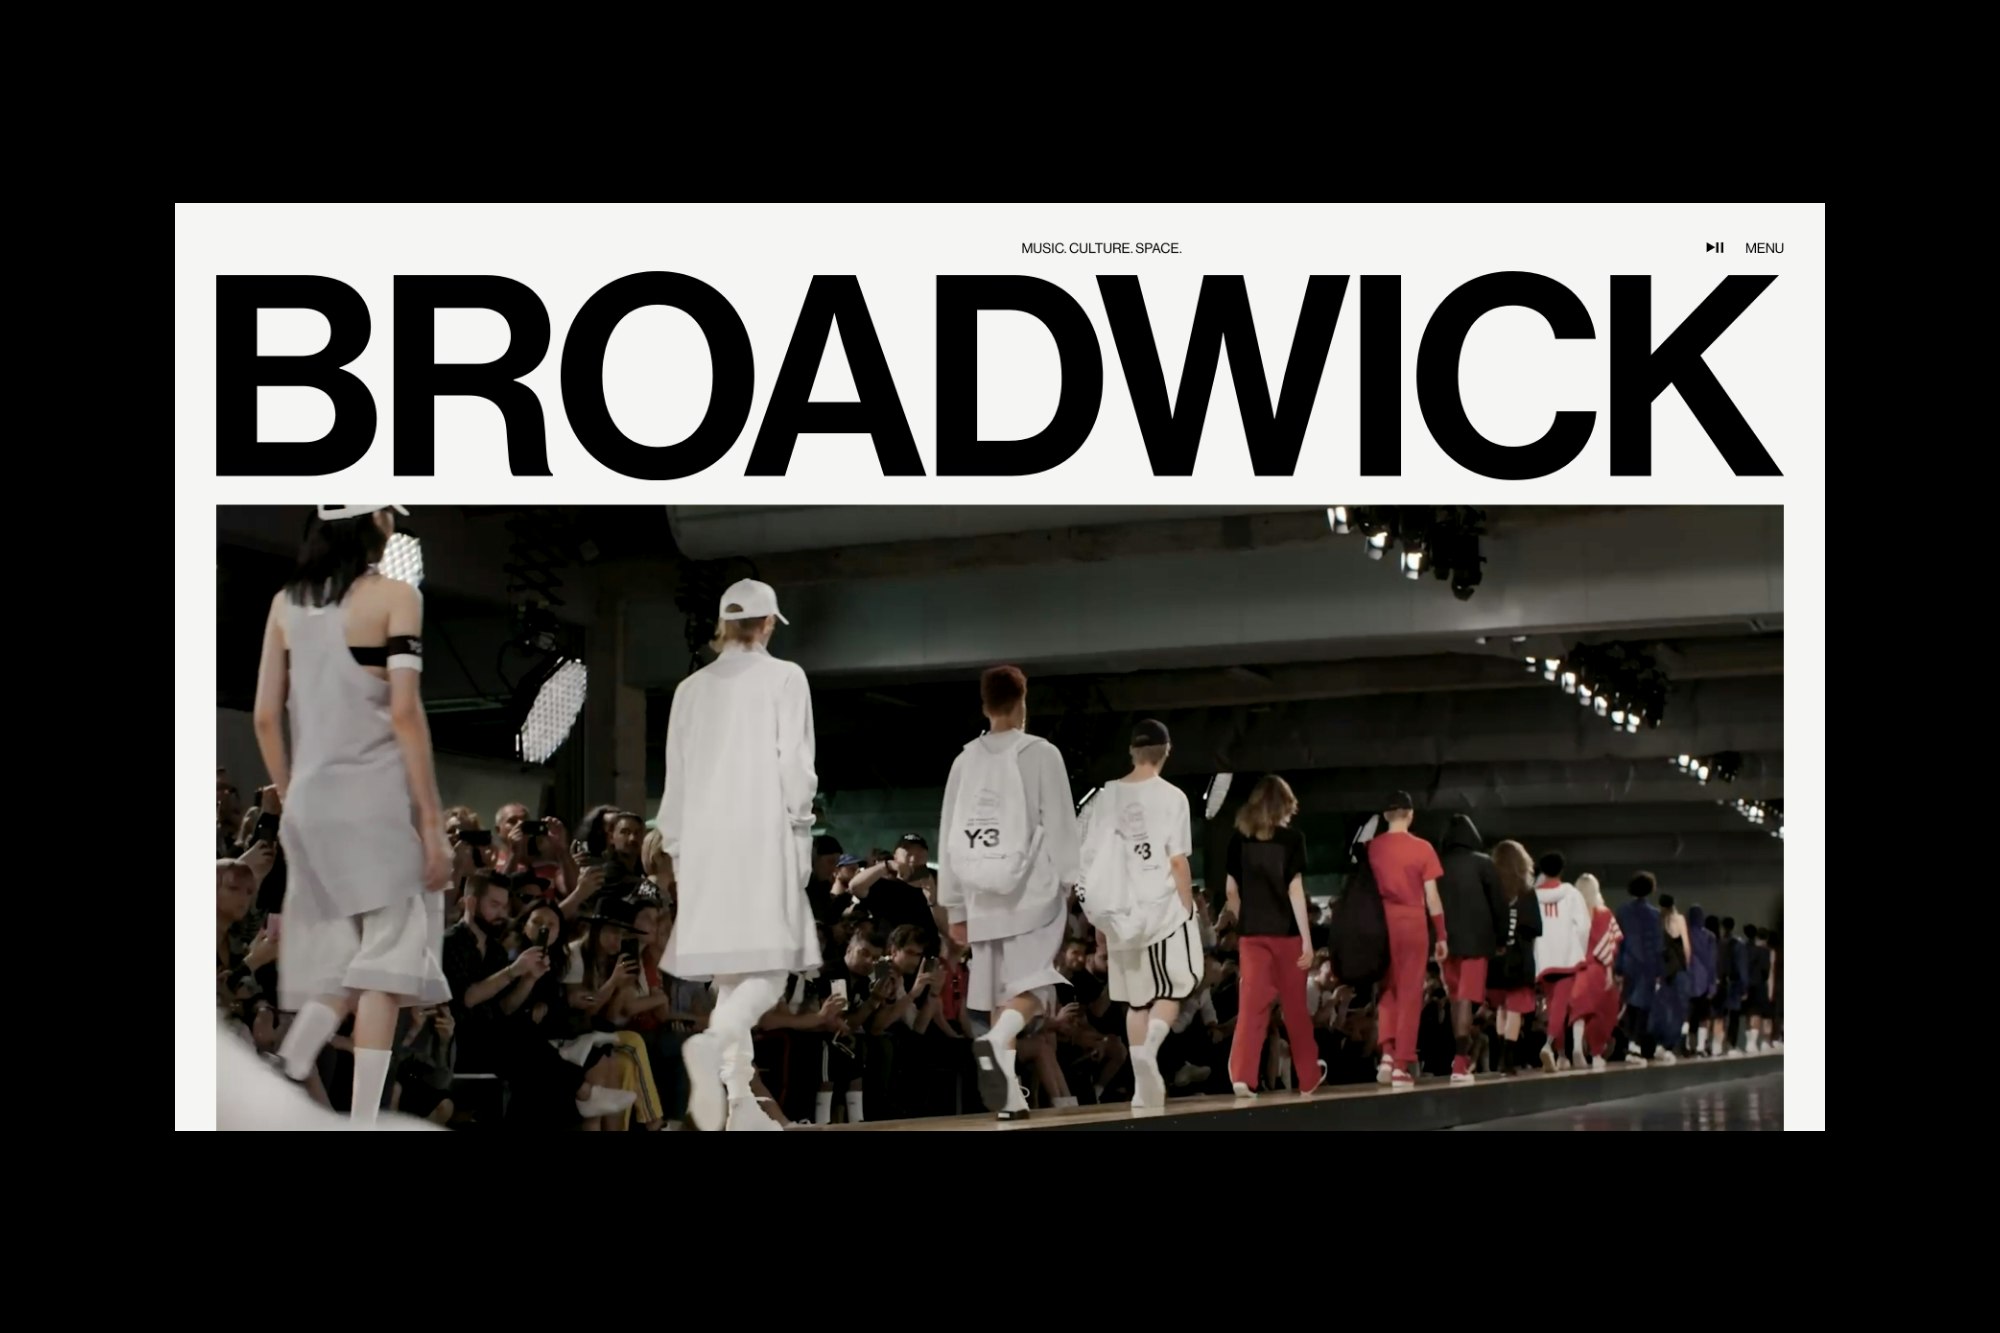 A screengrab of the Broadwick Live website